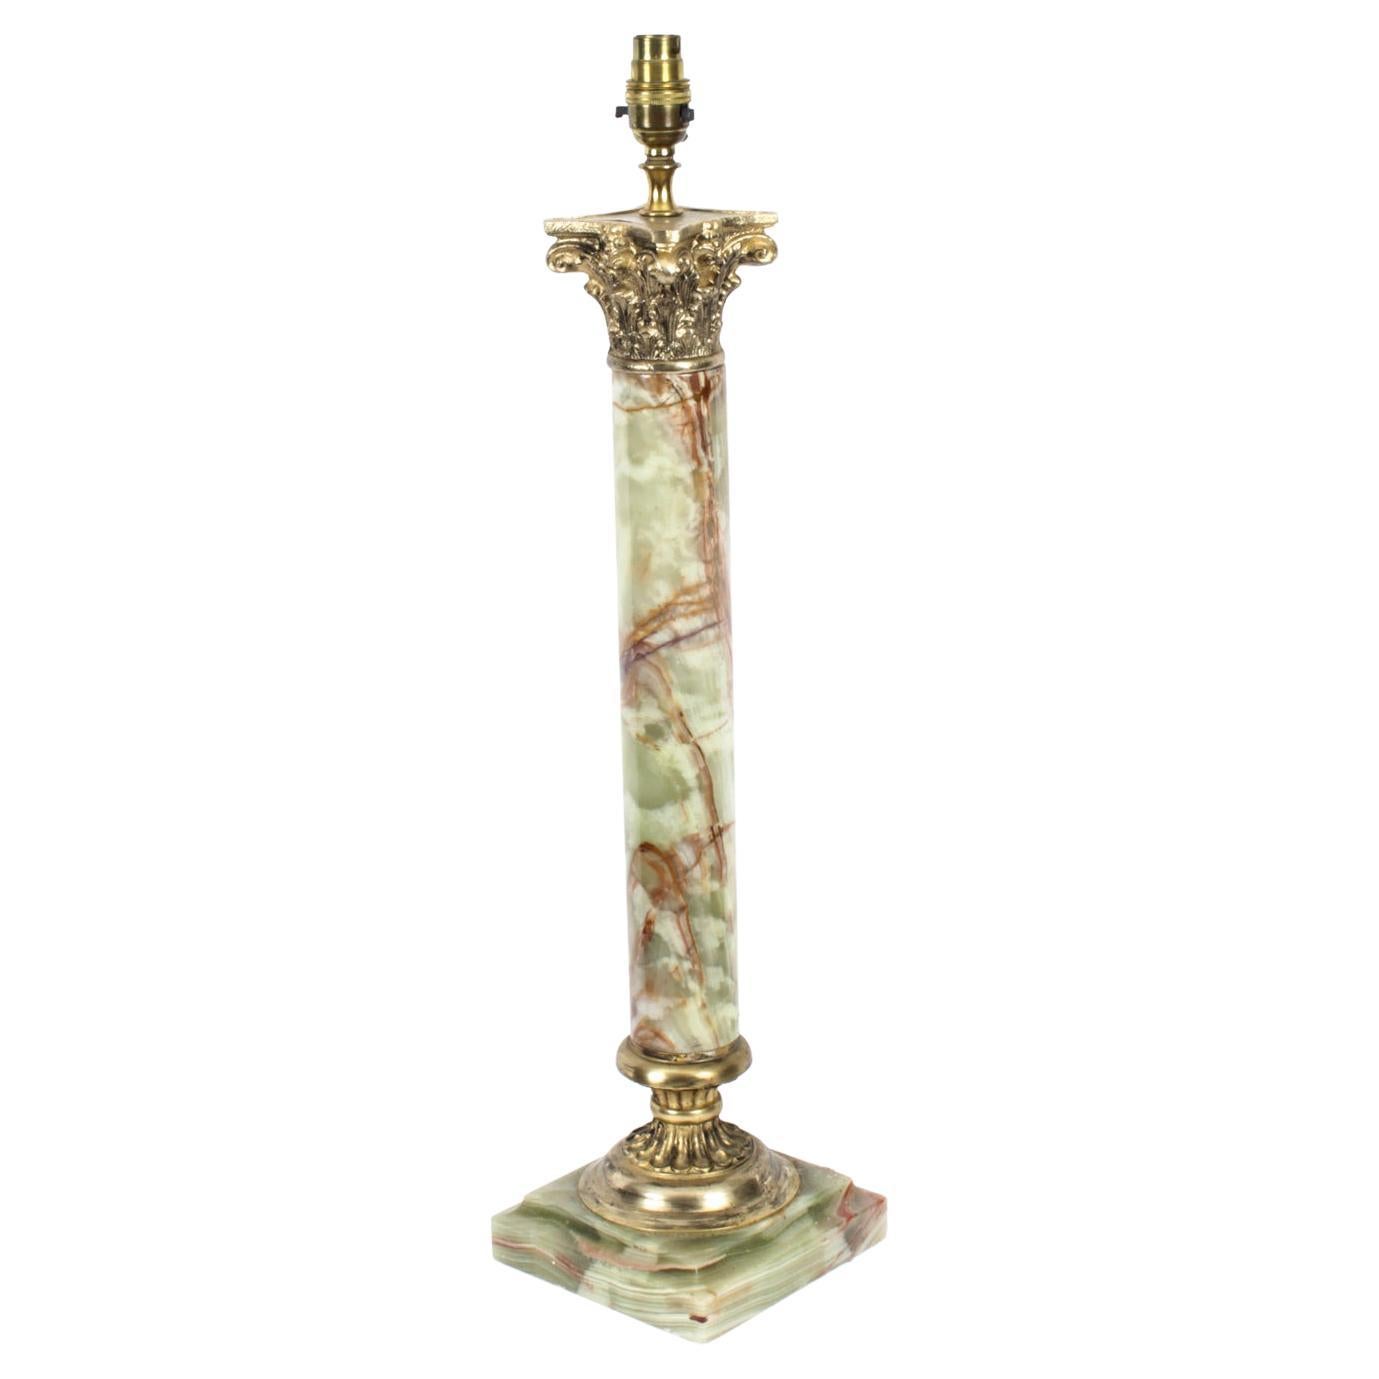 Antique French Ormolu Mounted Onyx Corinthian Column Table Lamp, 19th Century